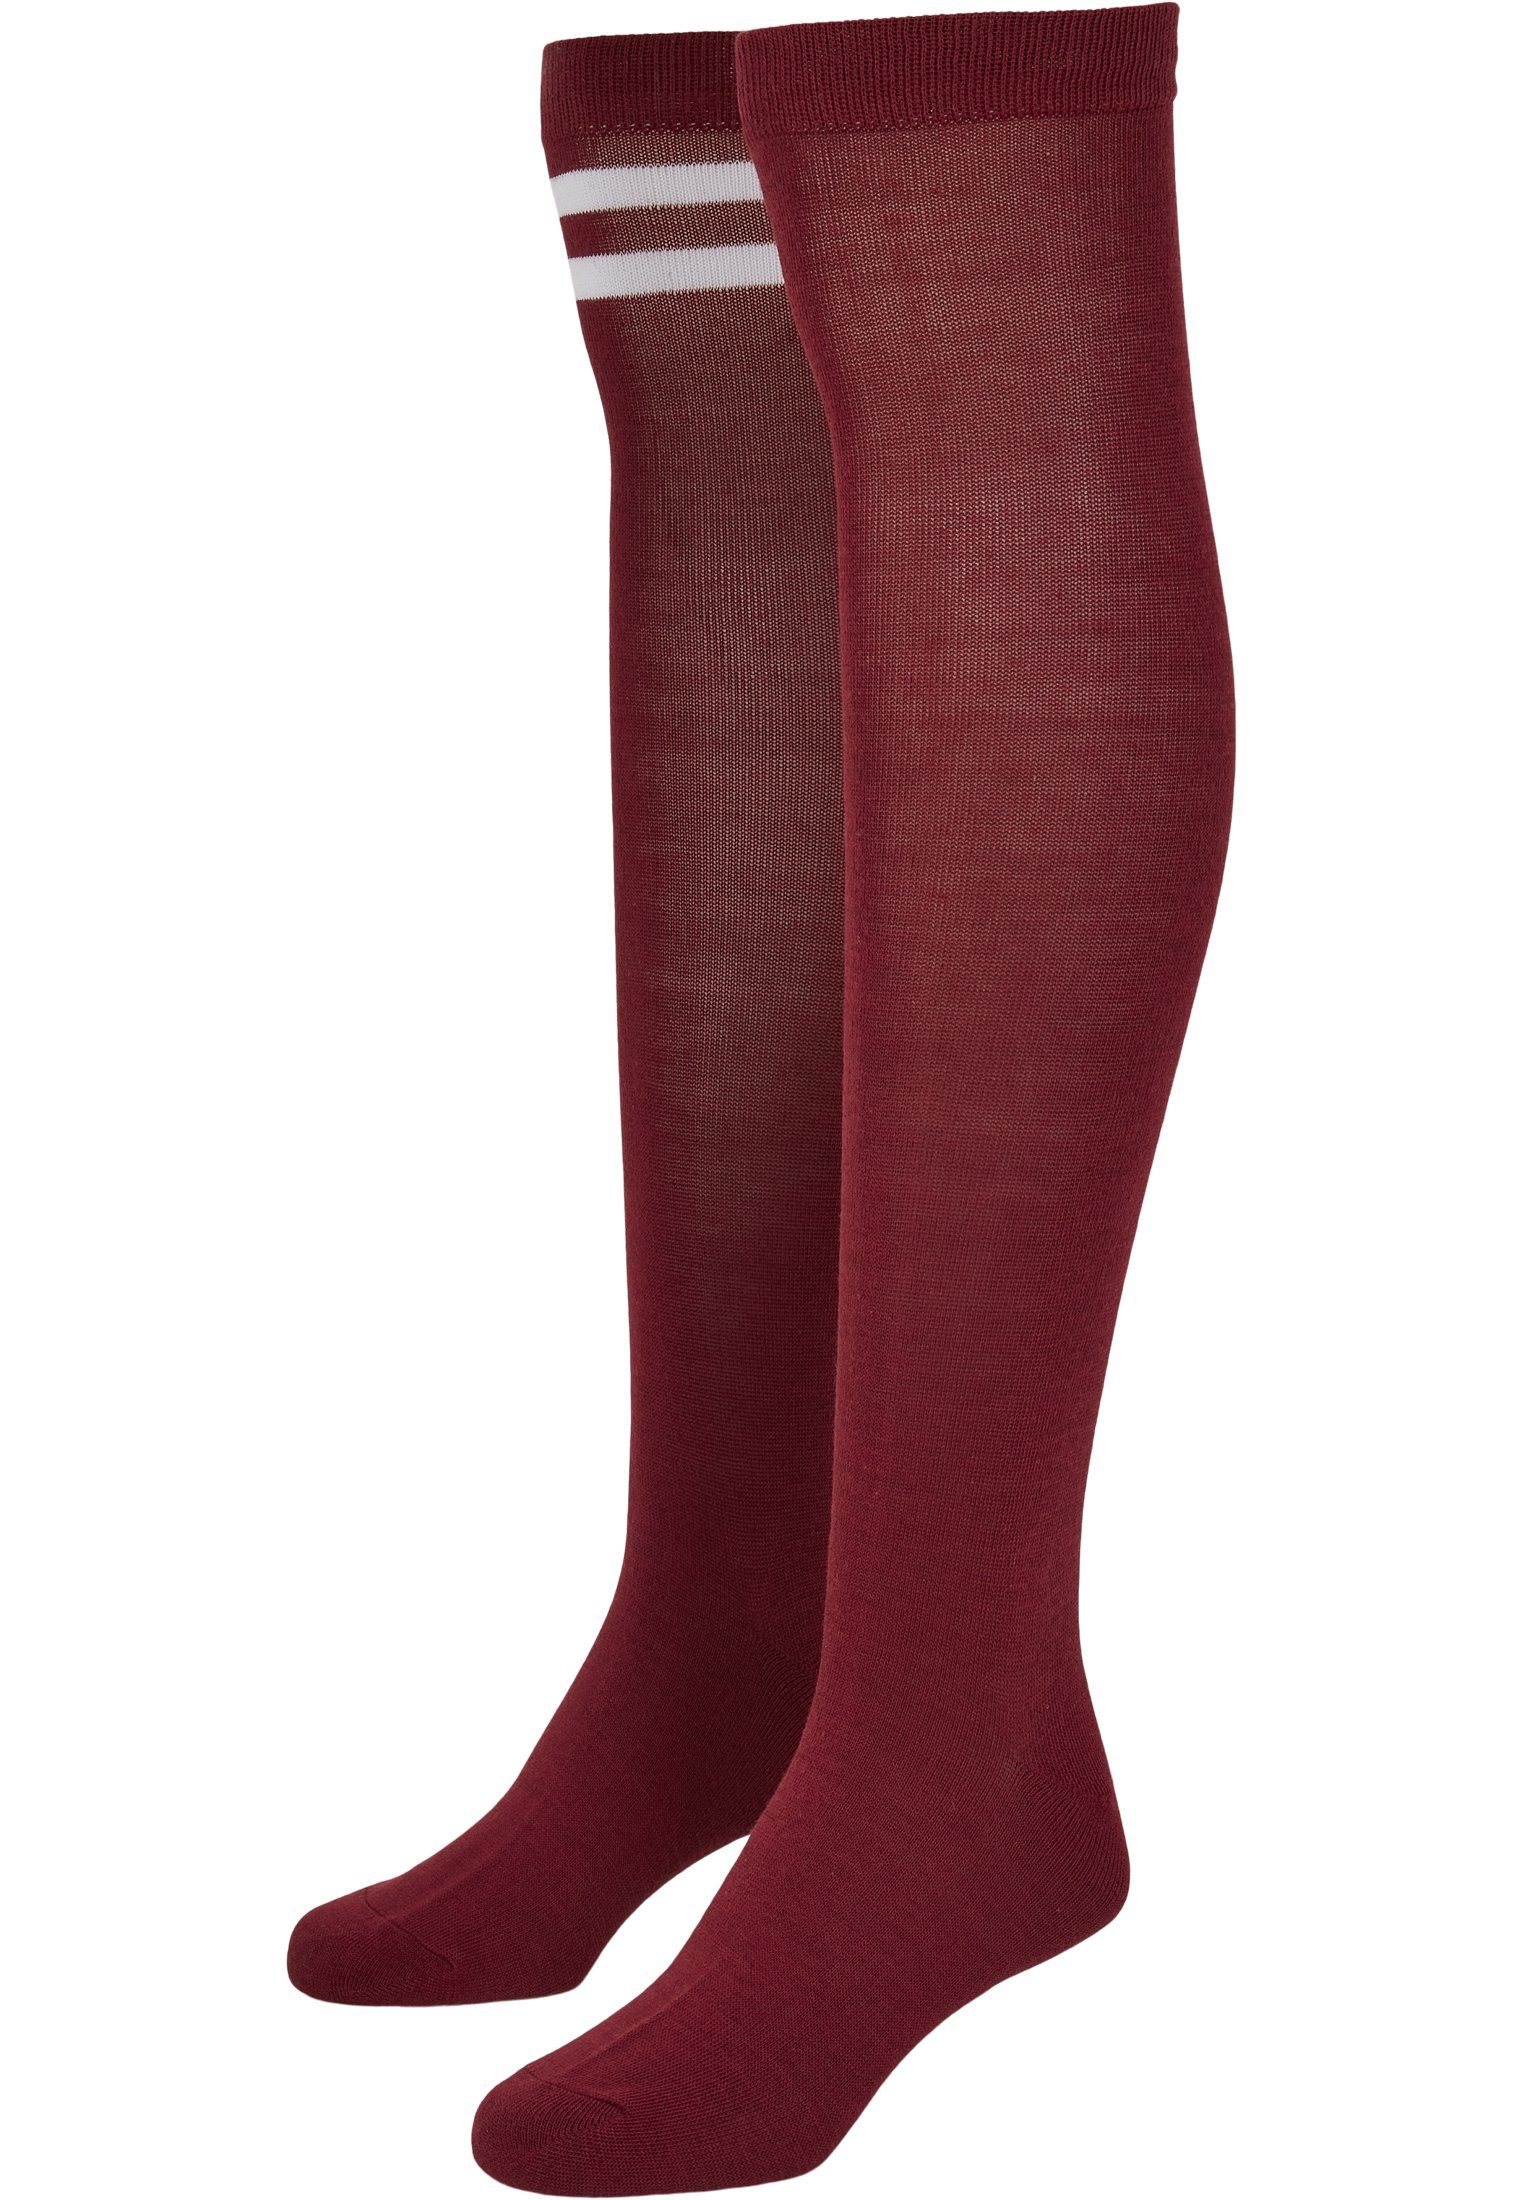 Socks Freizeitsocken (1-Paar) URBAN Ladies 2-Pack College burgundy CLASSICS Accessoires